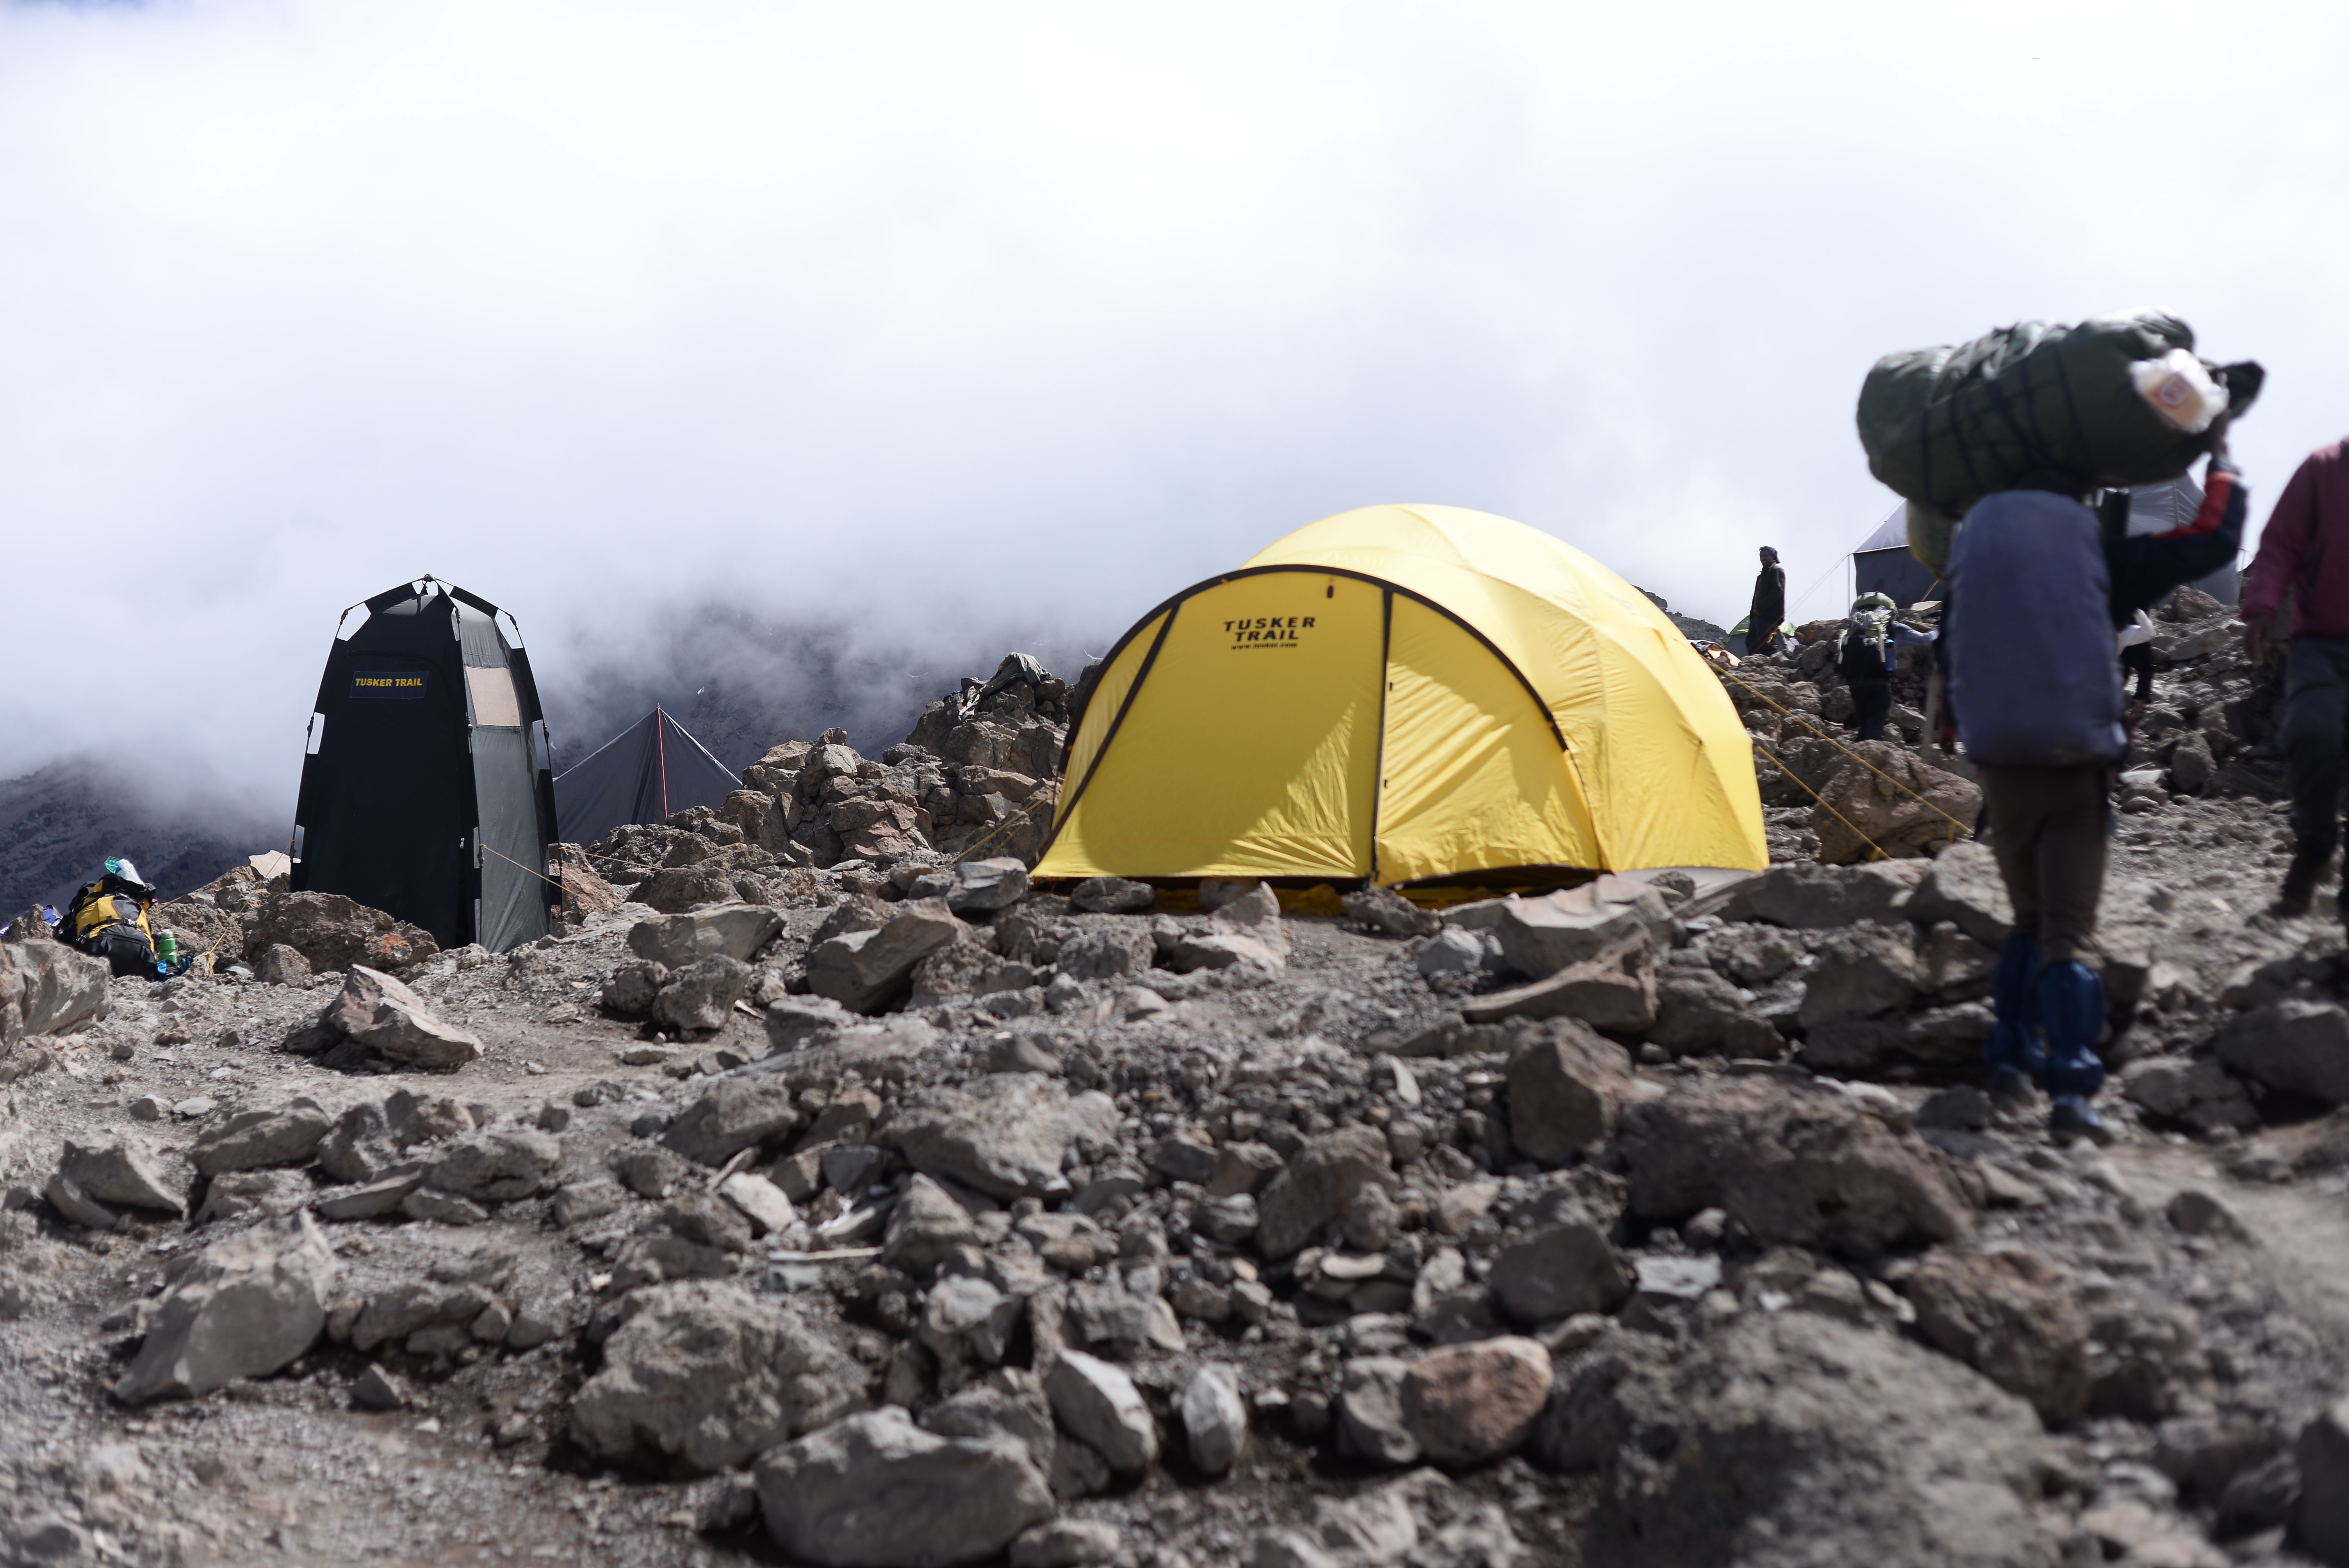 7-Day Kilimanjaro Lemosho Route - Best Price & Itinerary